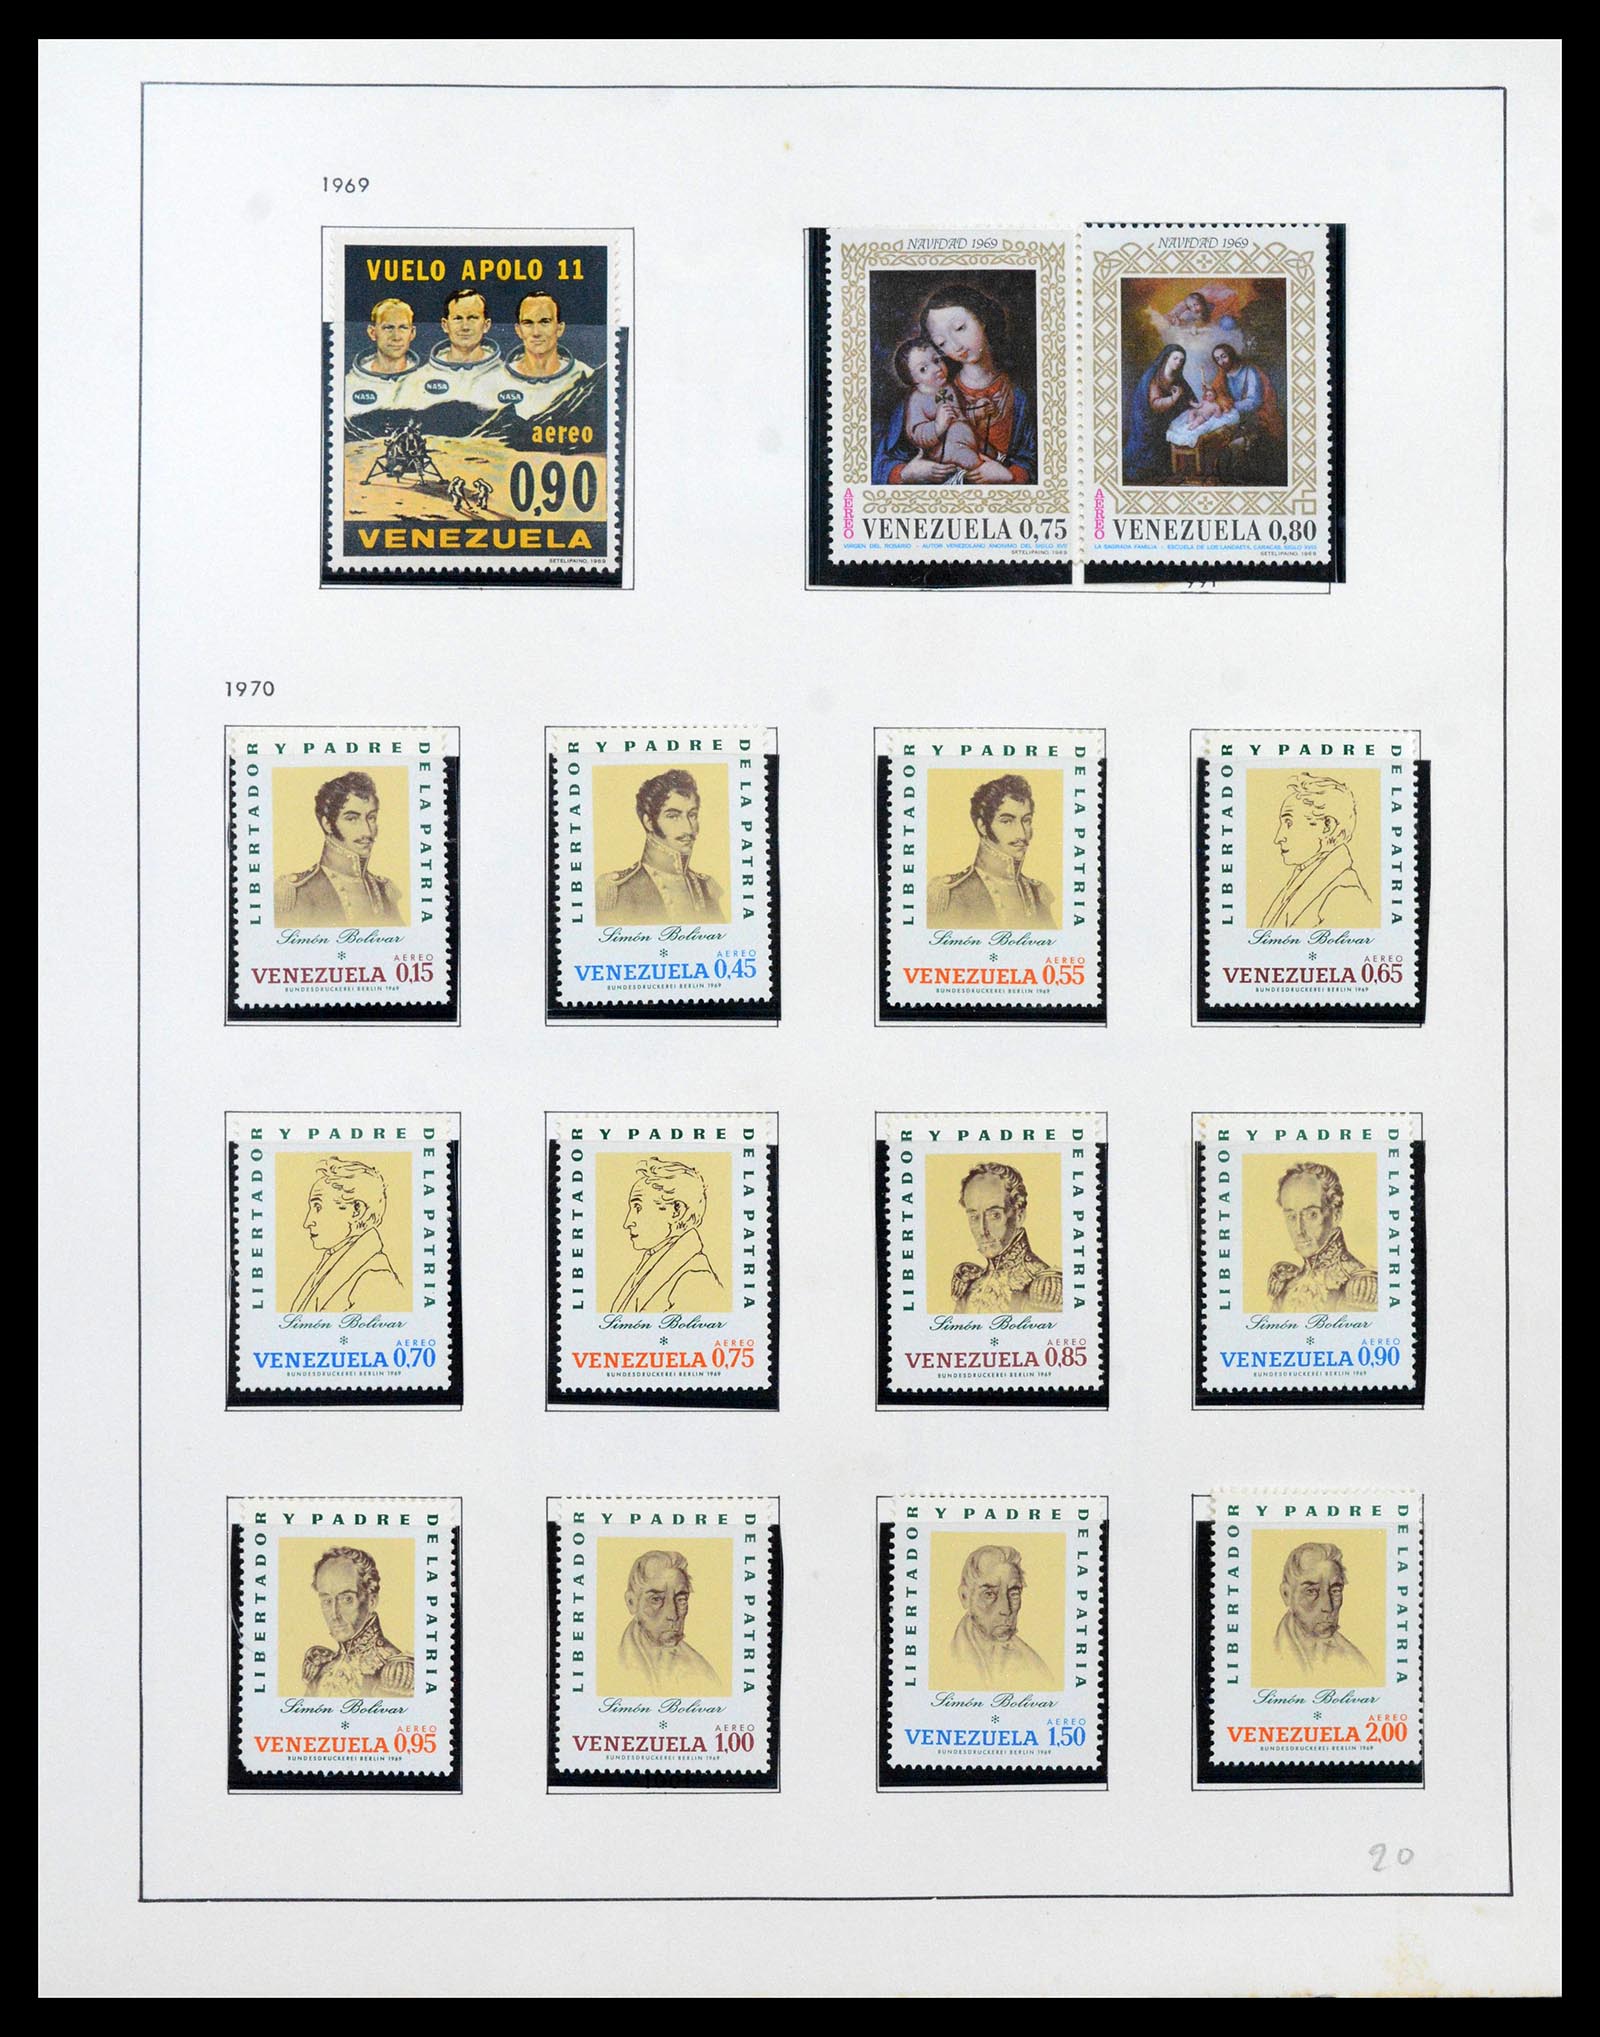 39436 0072 - Stamp collection 39436 Venezuela 1859-1985.